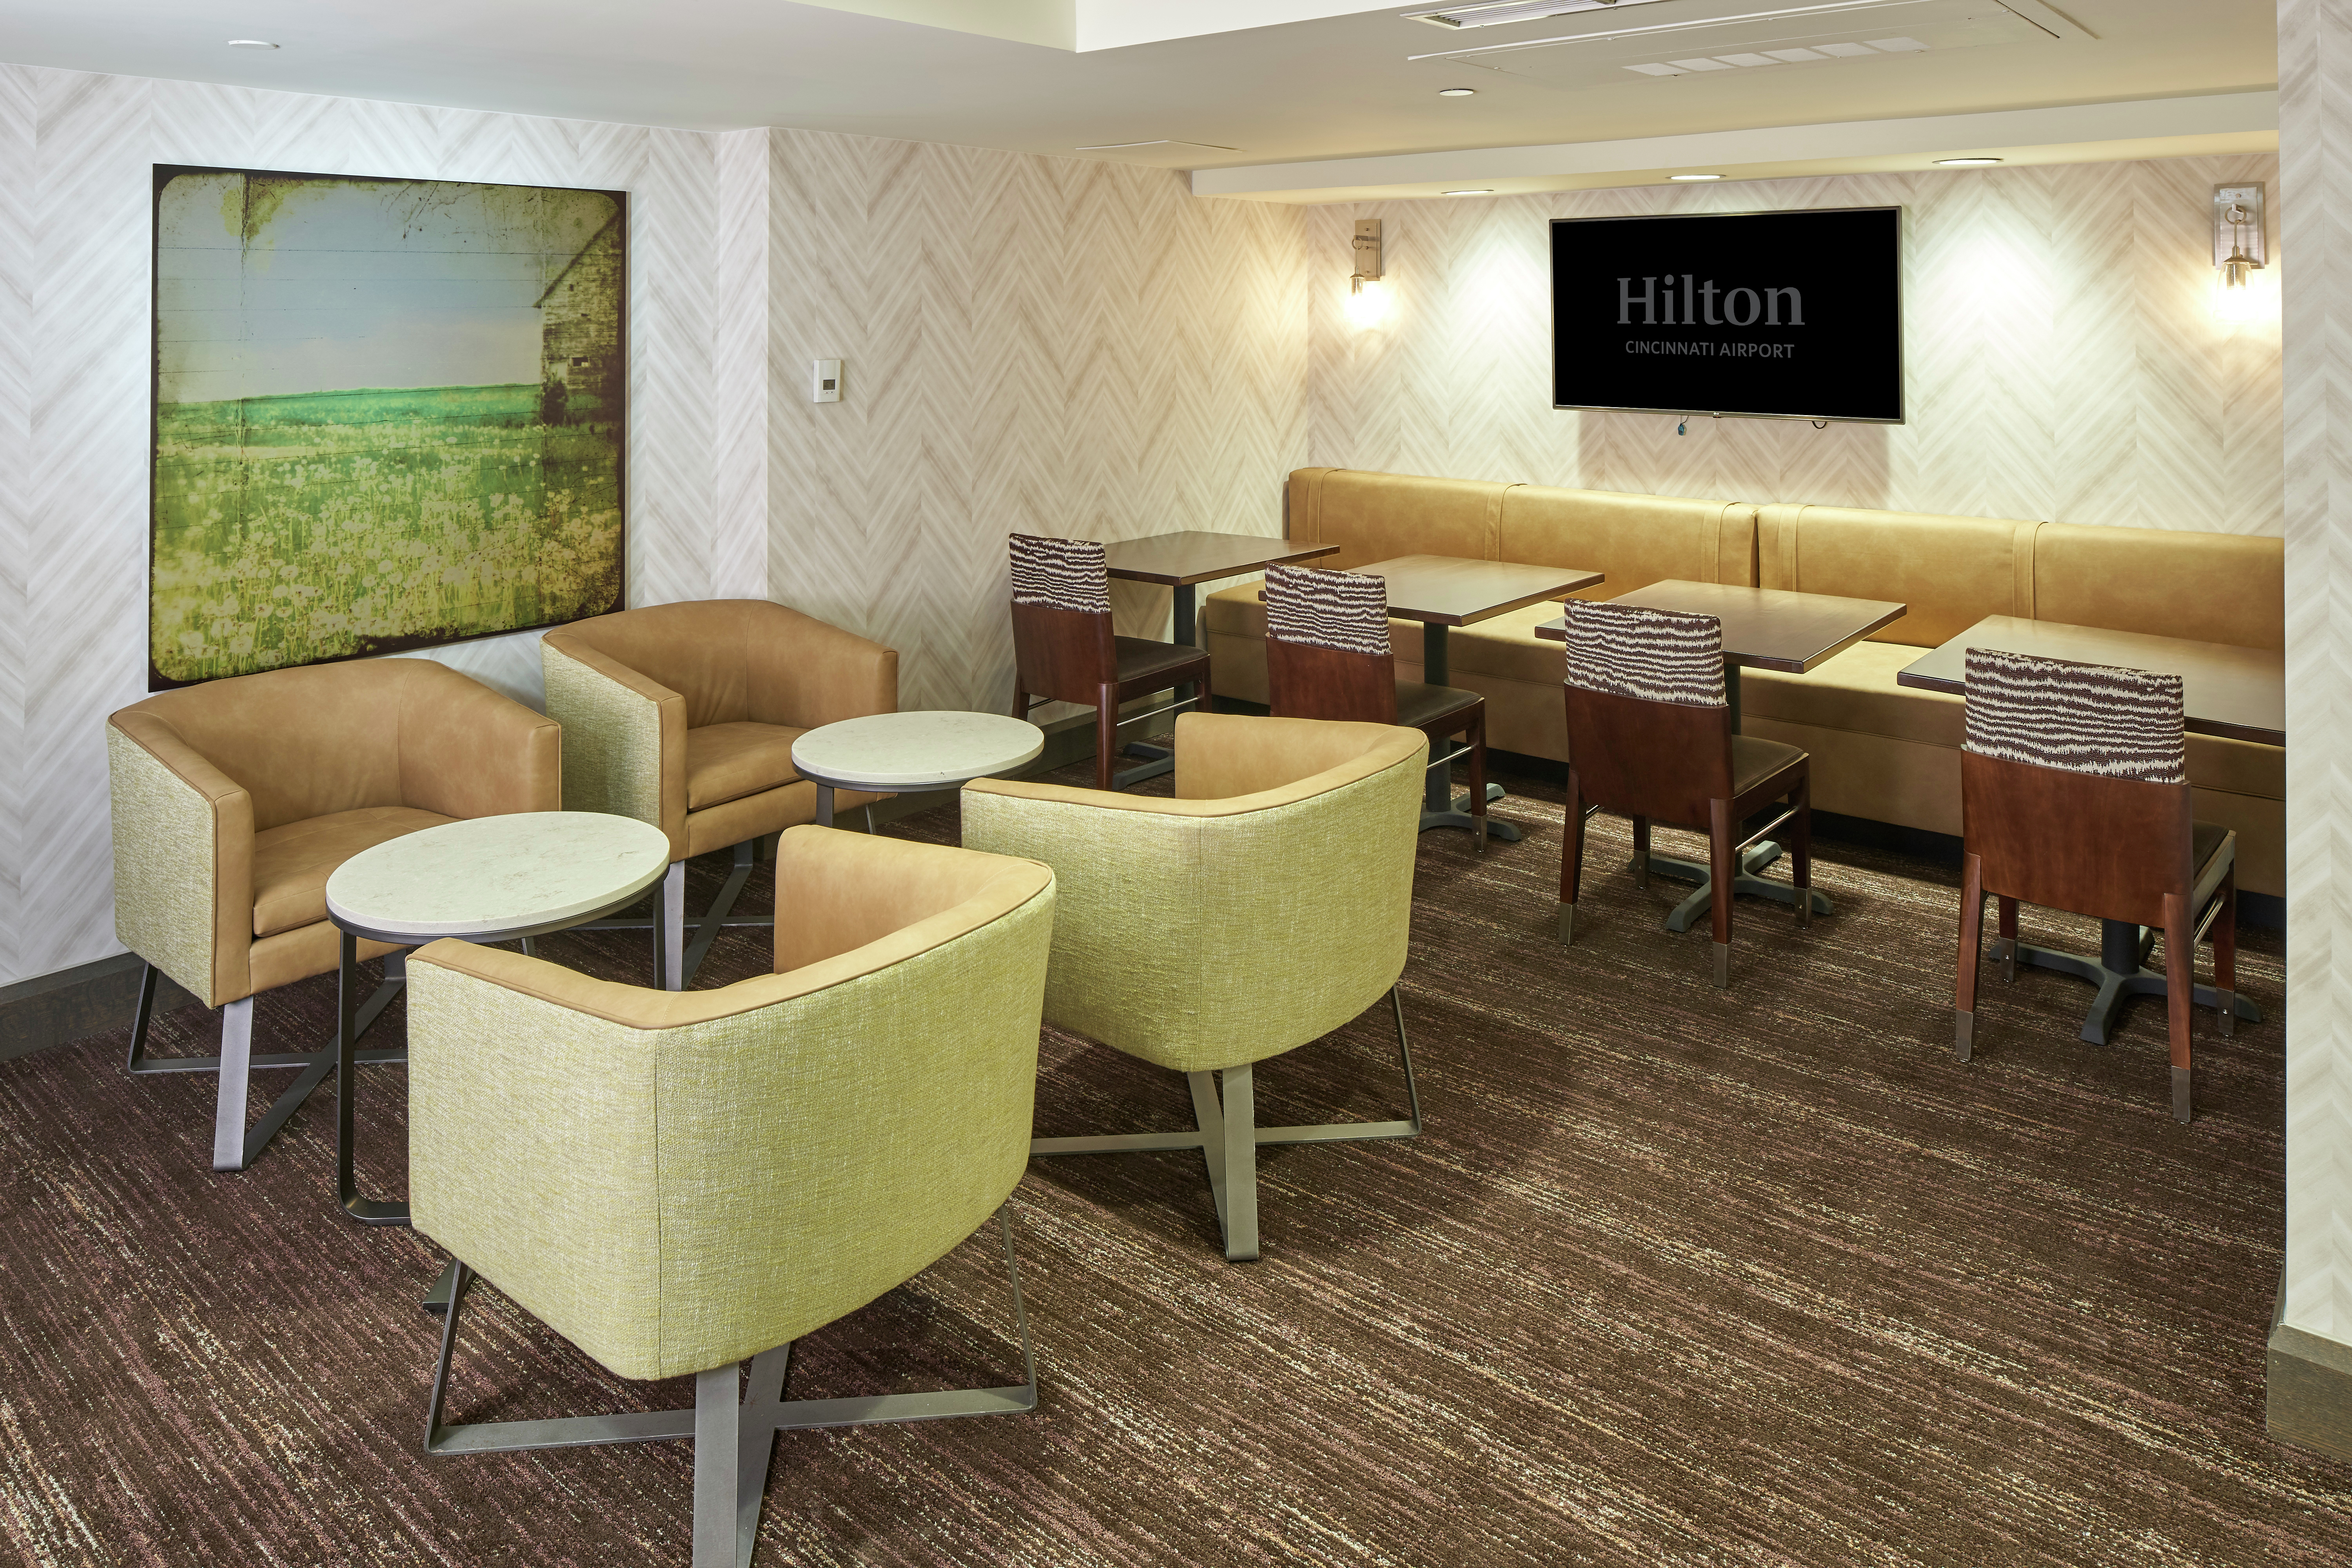 Hilton Honors Lounge - Seating